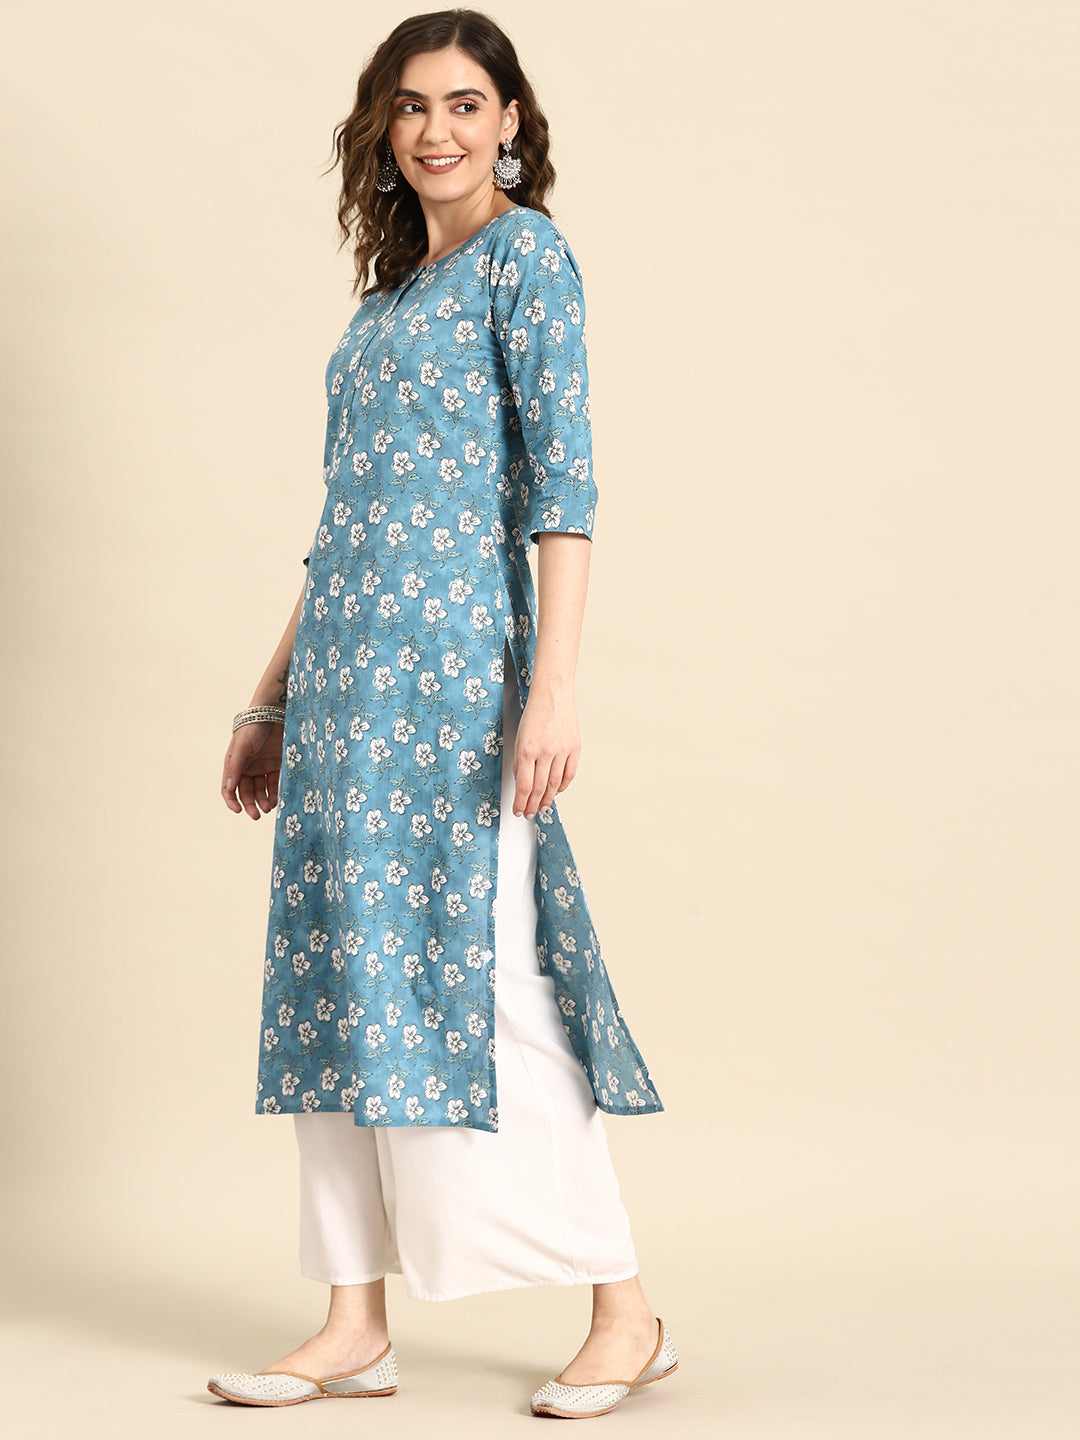 Women's Blue Ethnic Printed Straight Kurta with Three Quarter Sleeves - Nayo Clothing